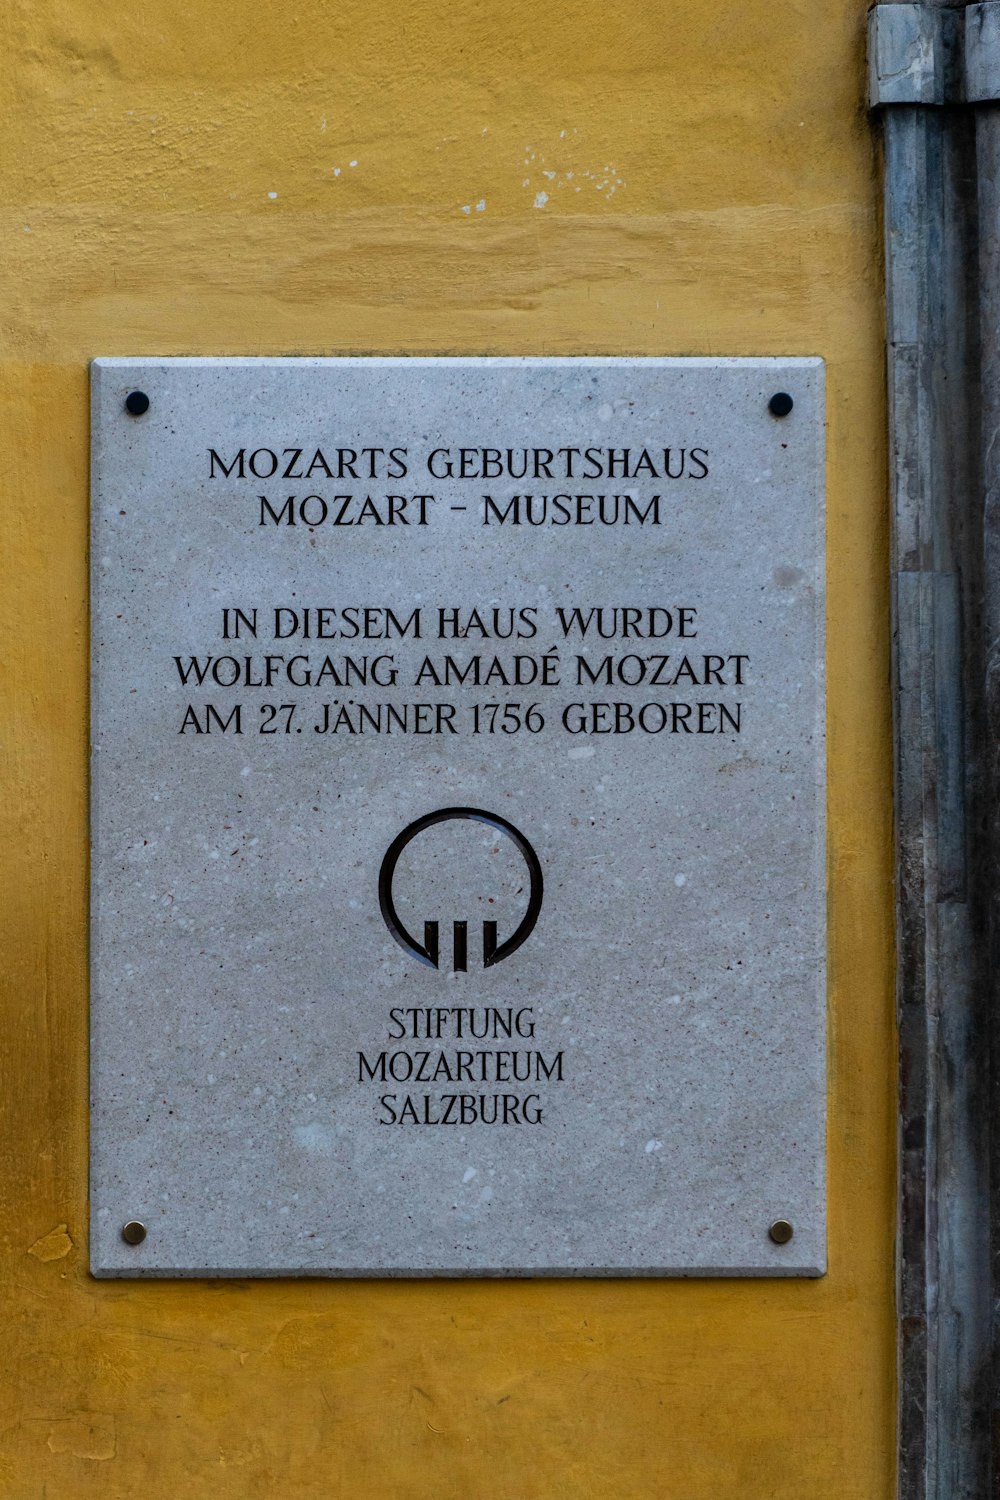 Mozarts Geburthaus signage